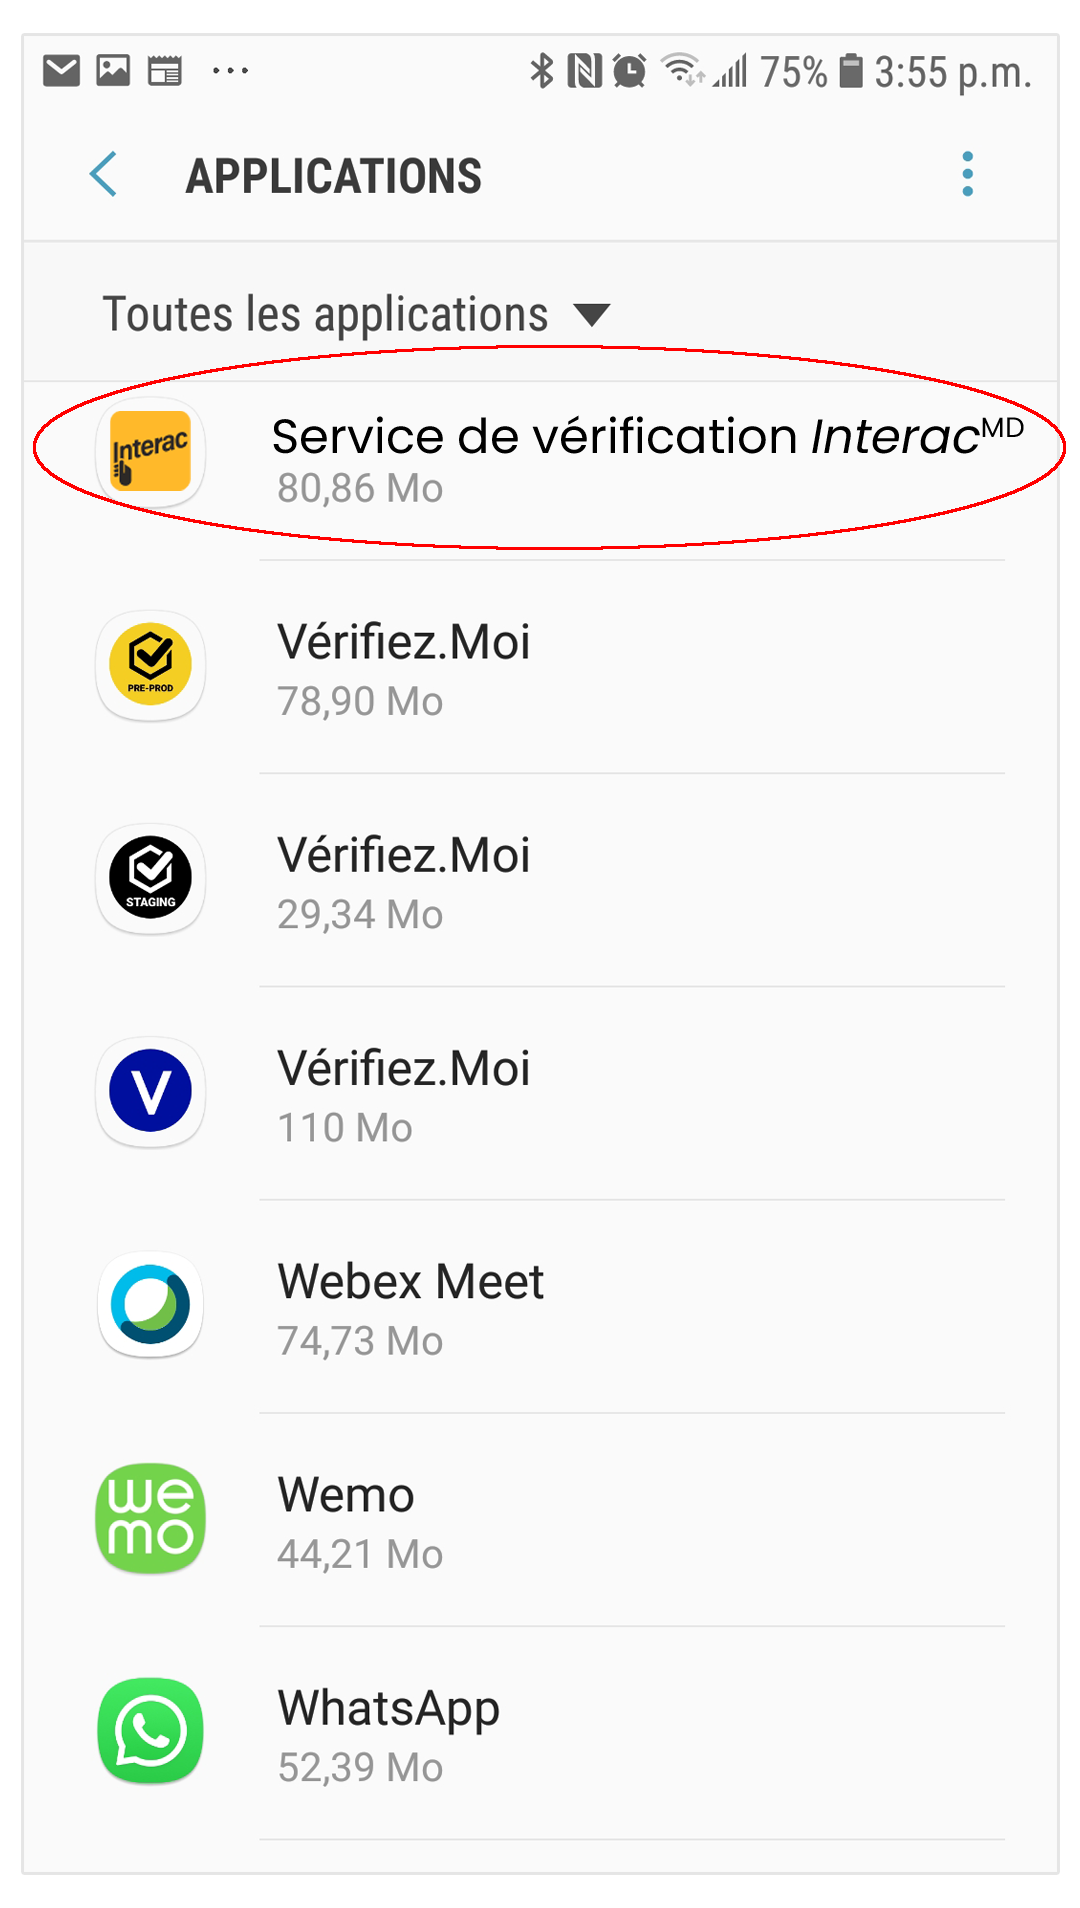 Interac verification service app URL adjustment Step 5